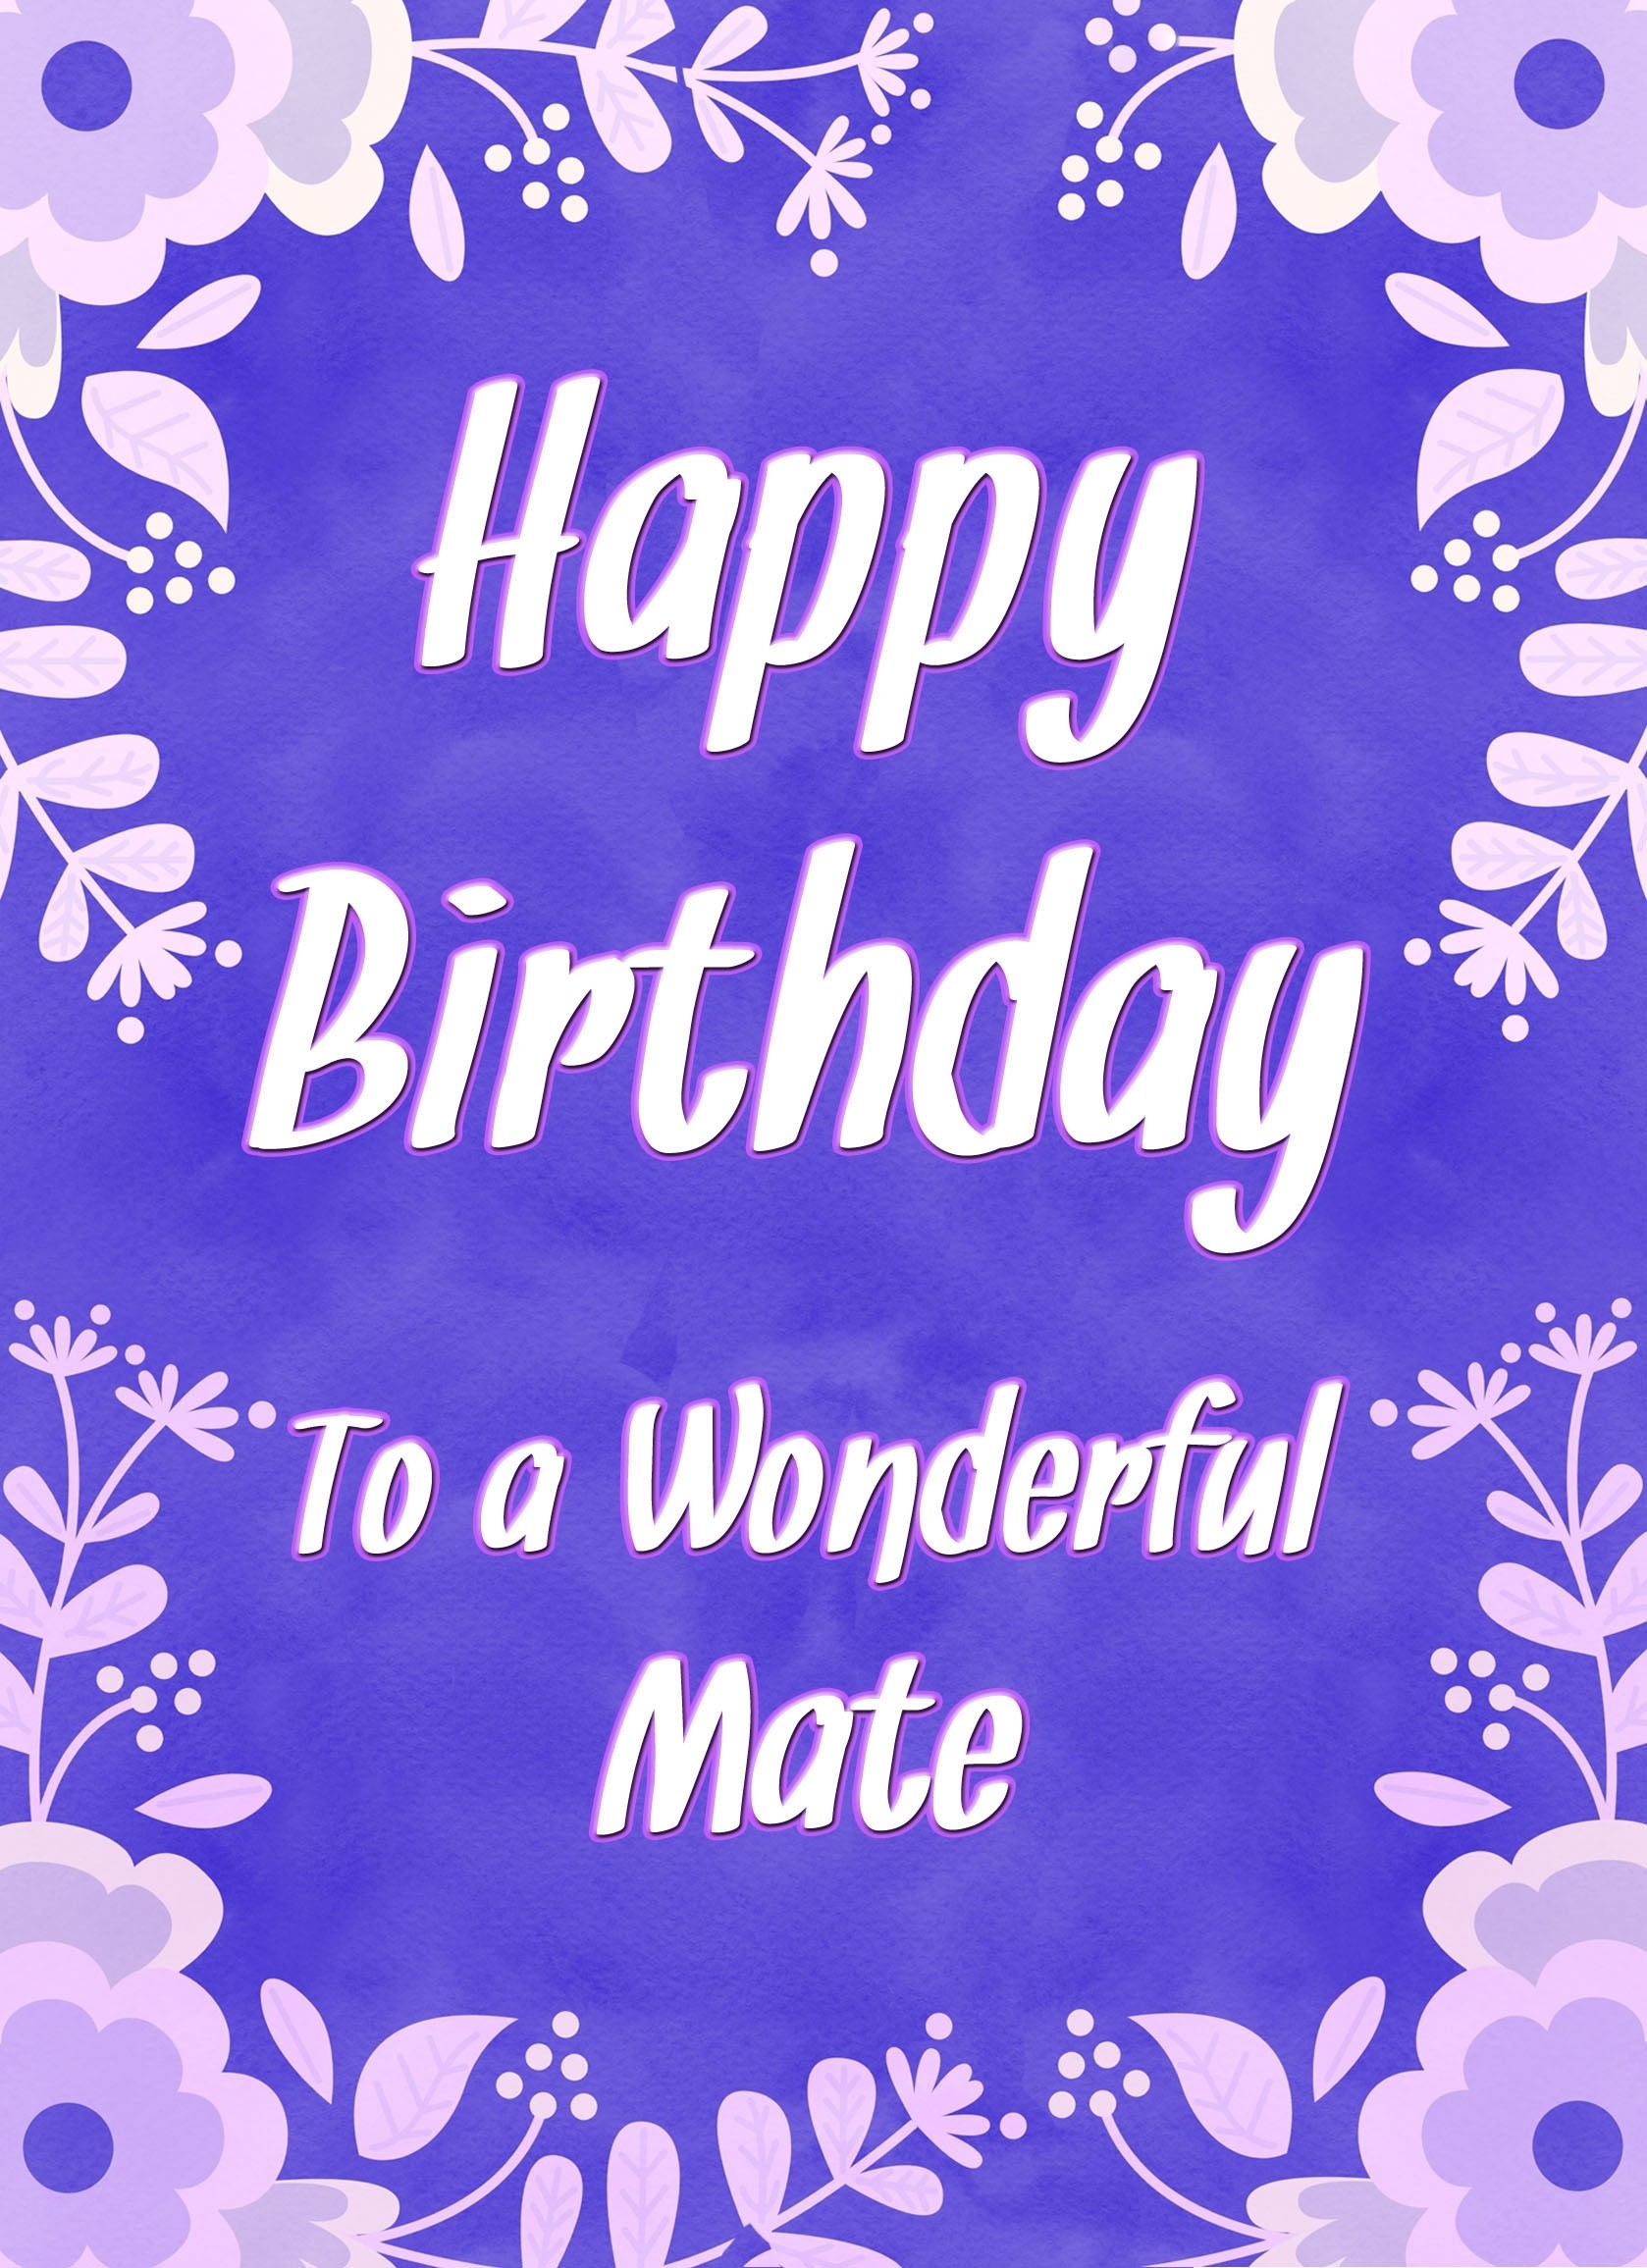 Birthday Card For Wonderful Mate (Purple Border)